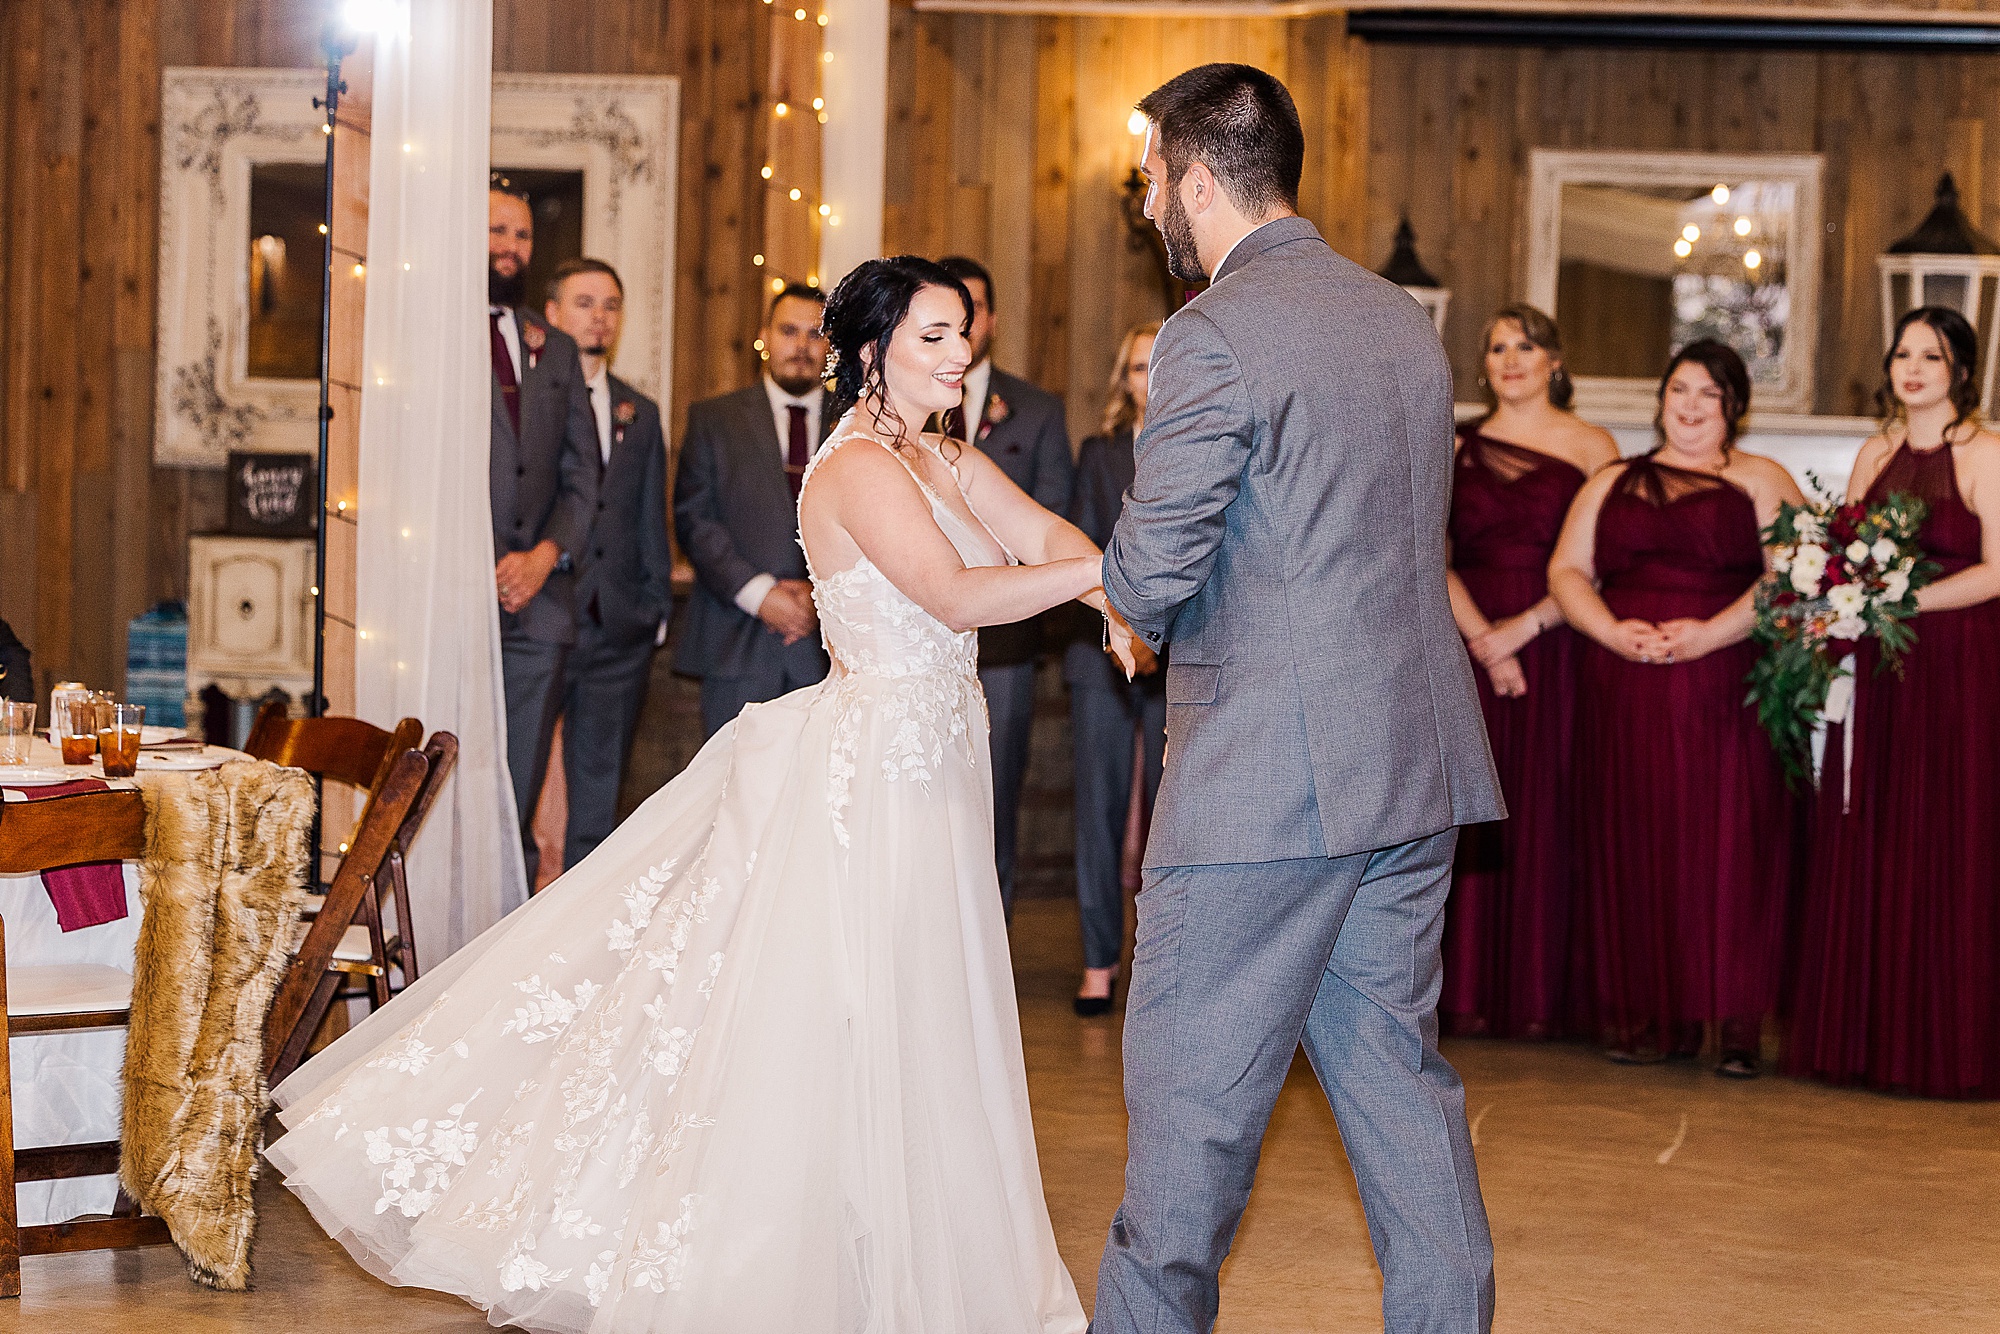 newlyweds first dance at Texas wedding reception